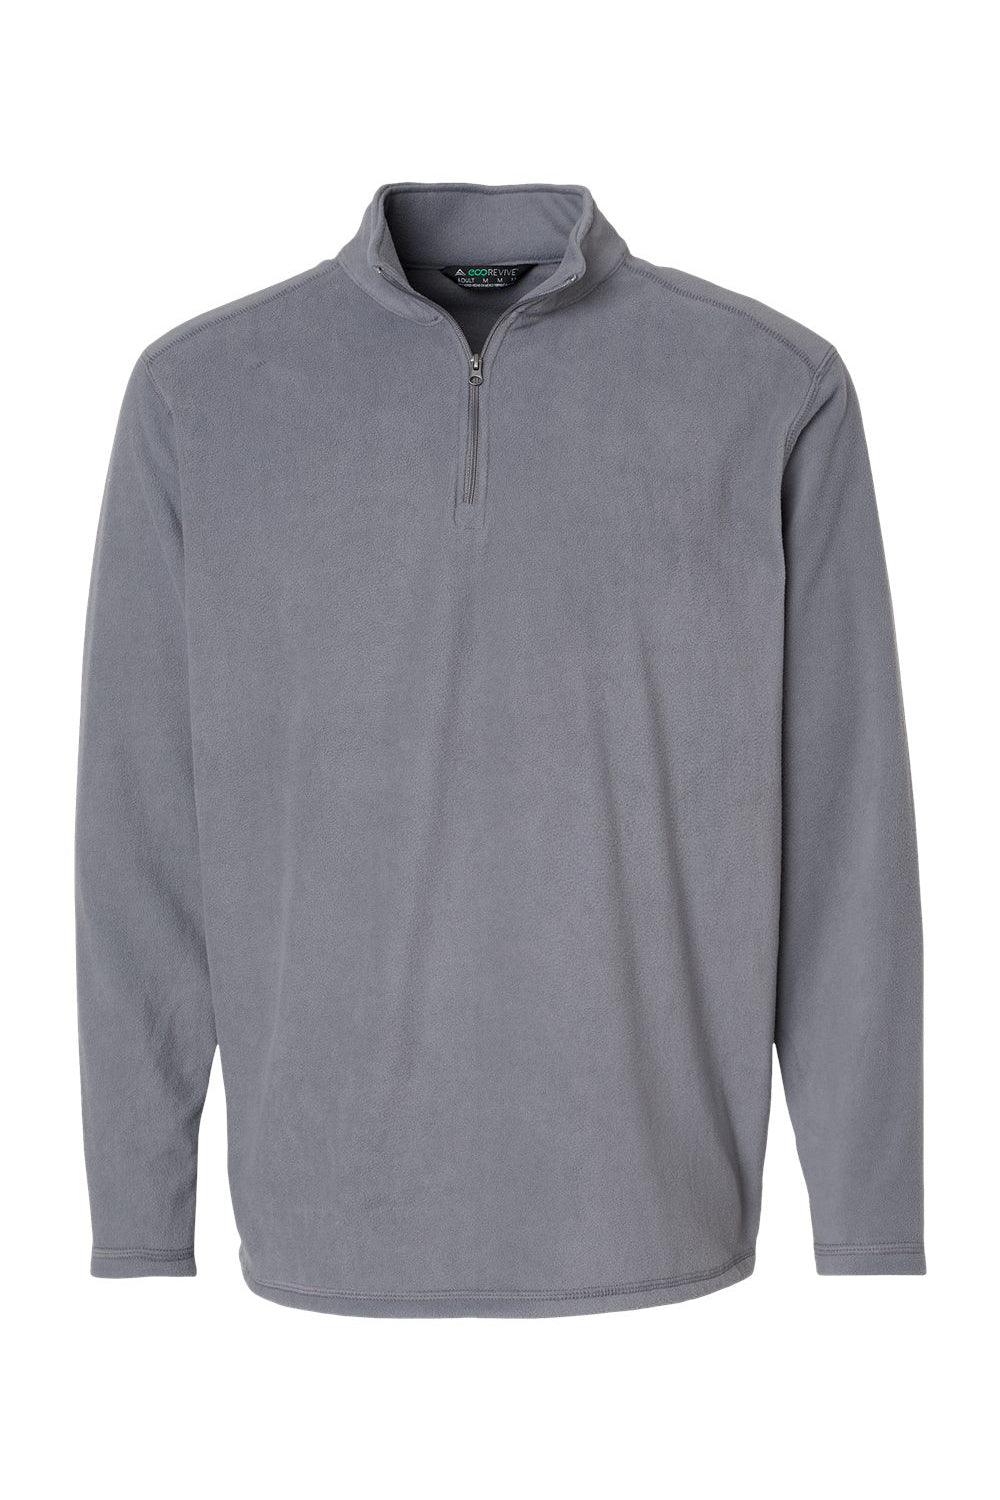 Augusta Sportswear 6863 Mens Eco Revive Micro Lite Fleece 1/4 Zip Pullover Graphite Grey Flat Front